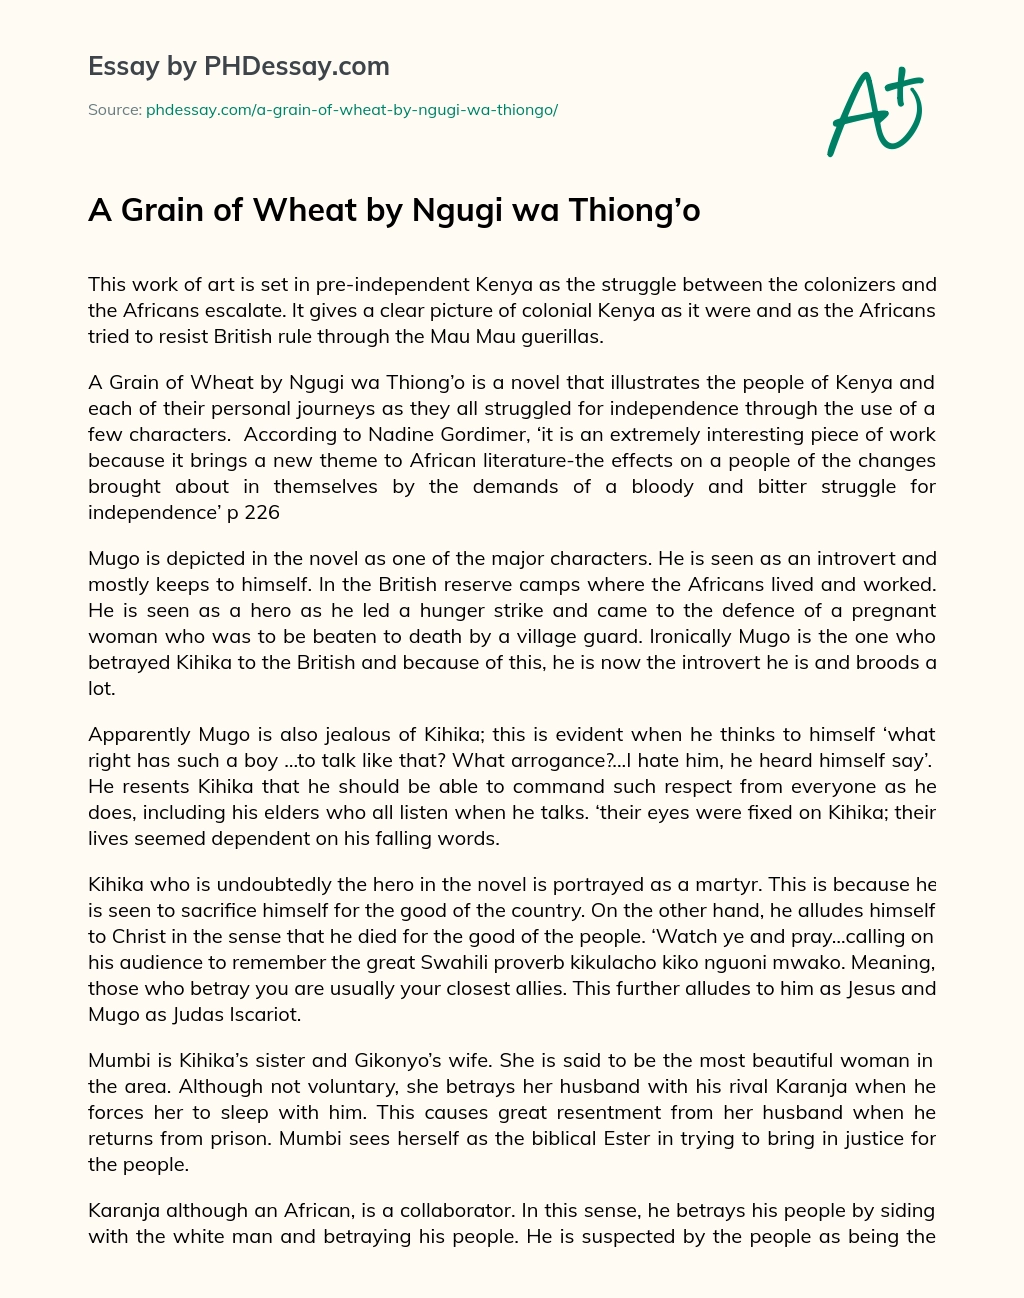 A Grain of Wheat by Ngugi wa Thiong’o essay